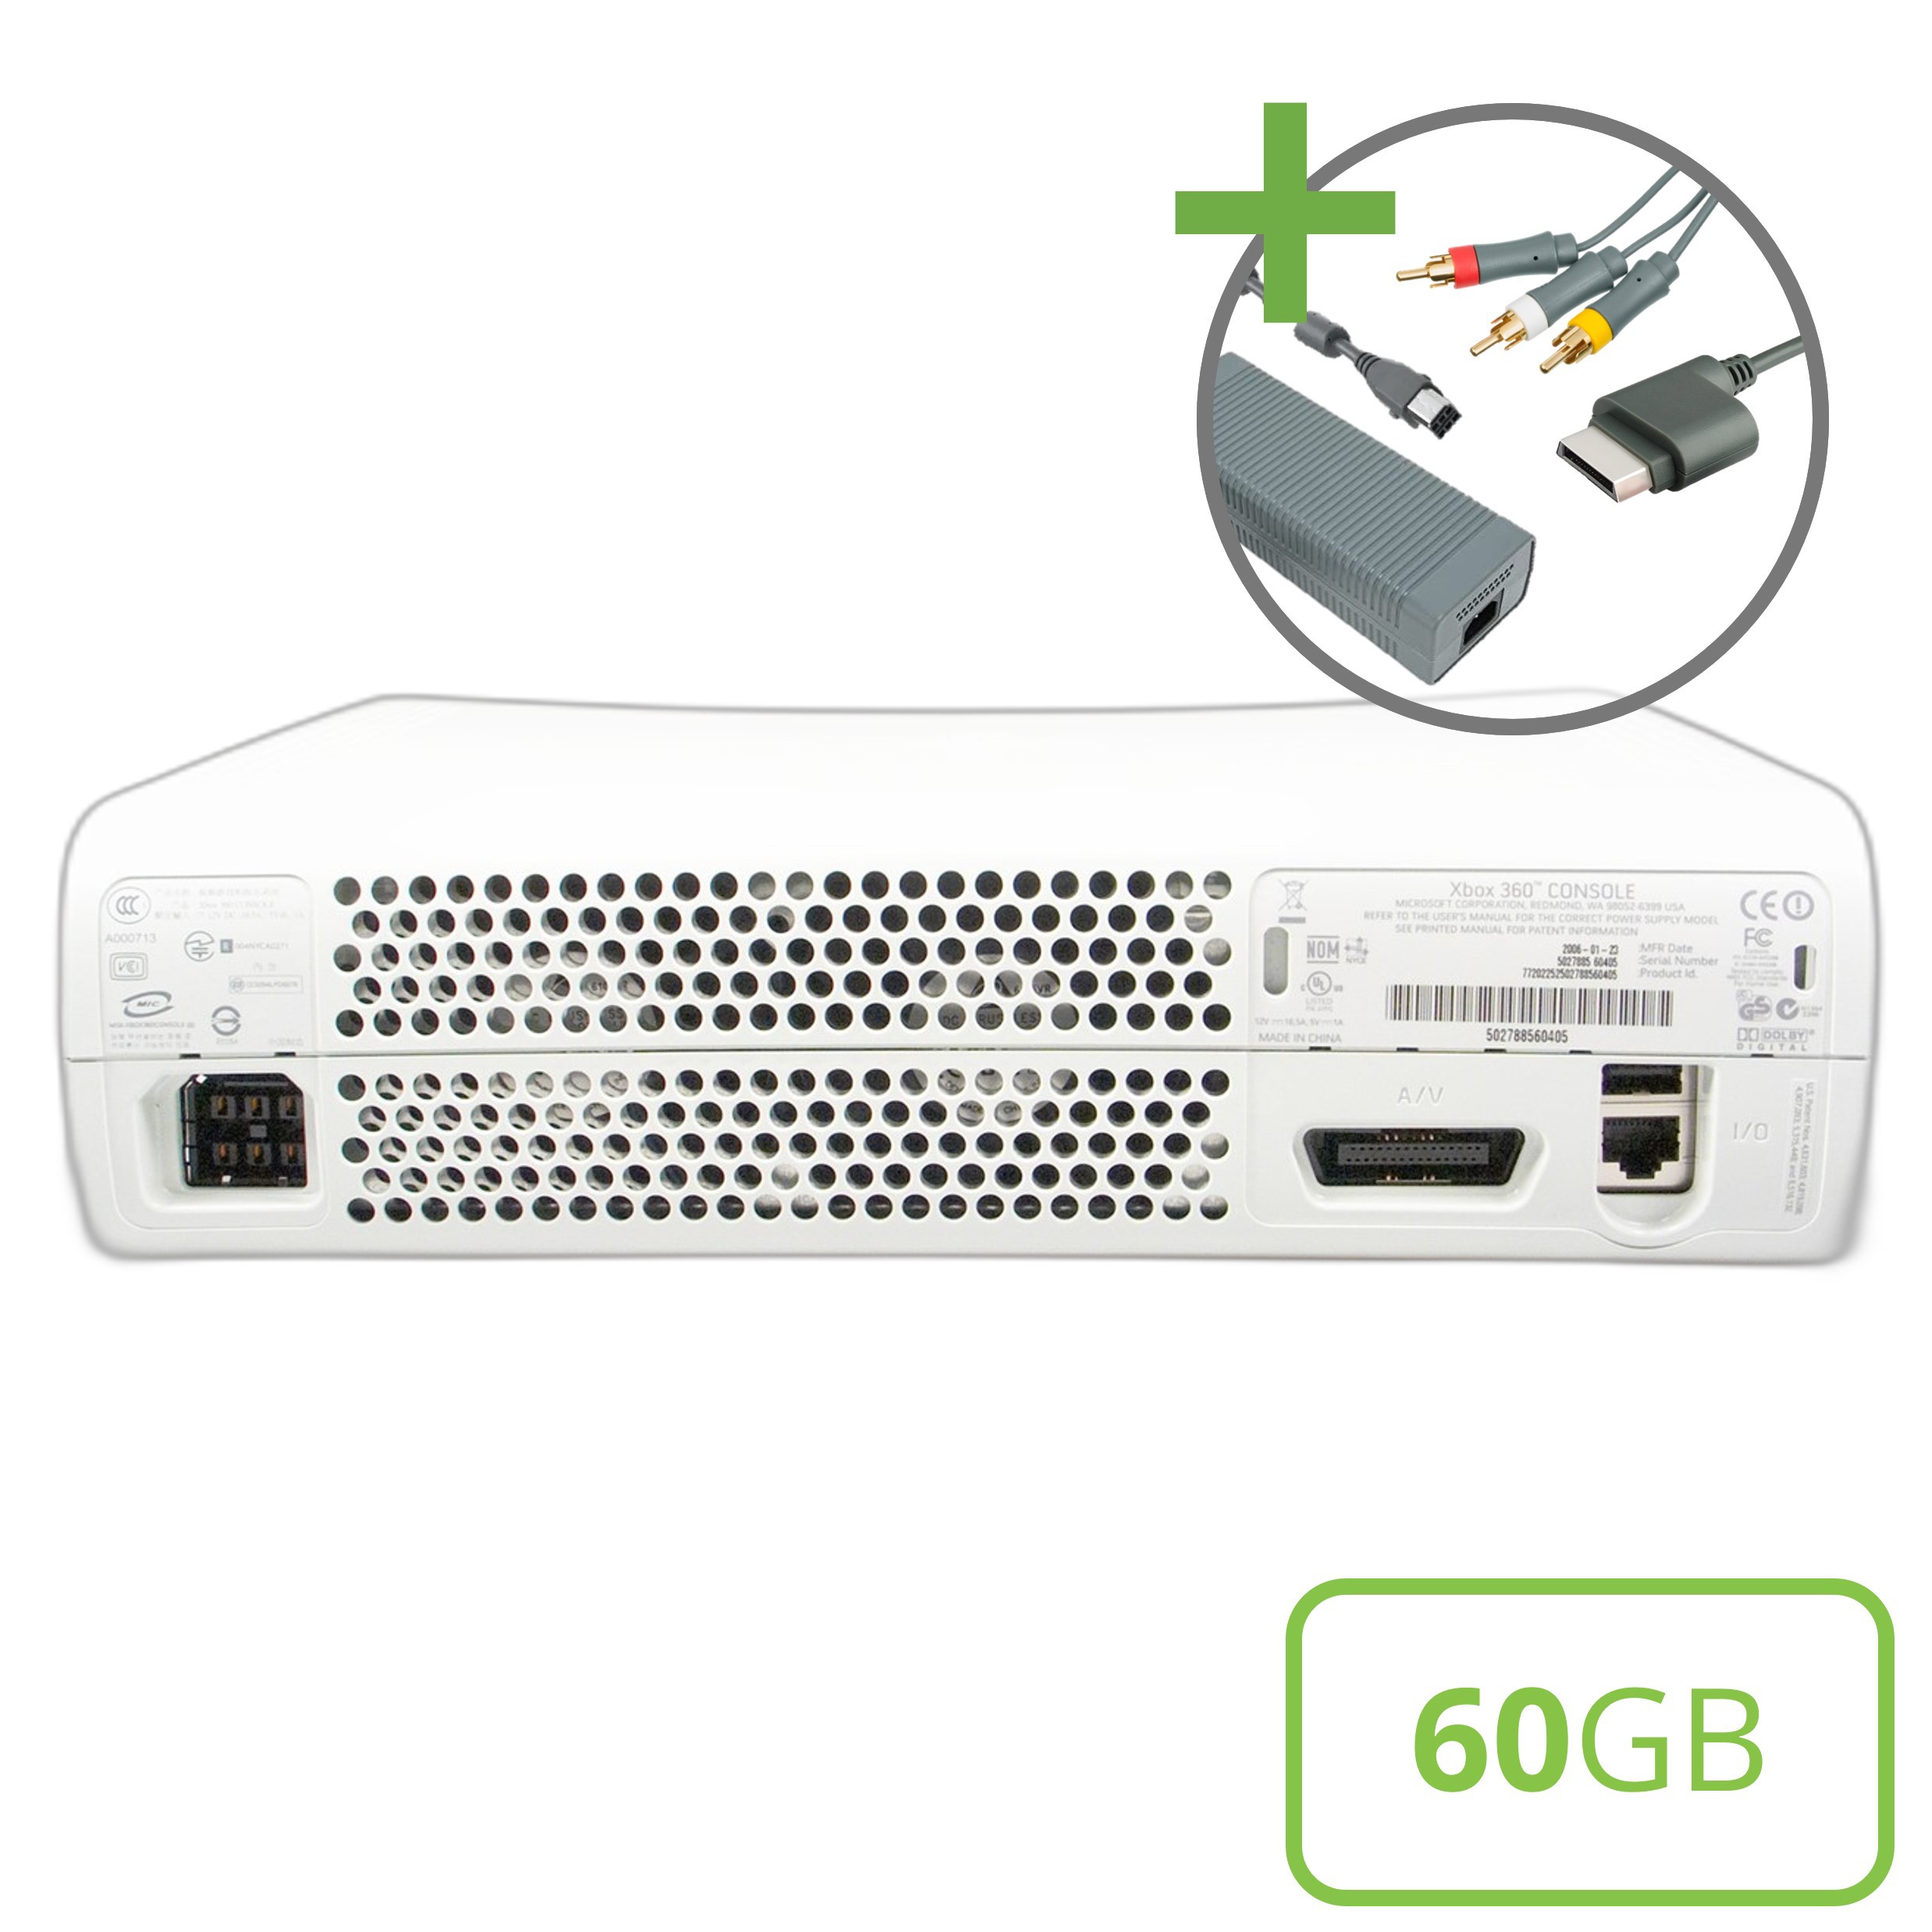 Microsoft Xbox 360 Premium Console (AV) - 60GB - Xbox 360 Hardware - 3